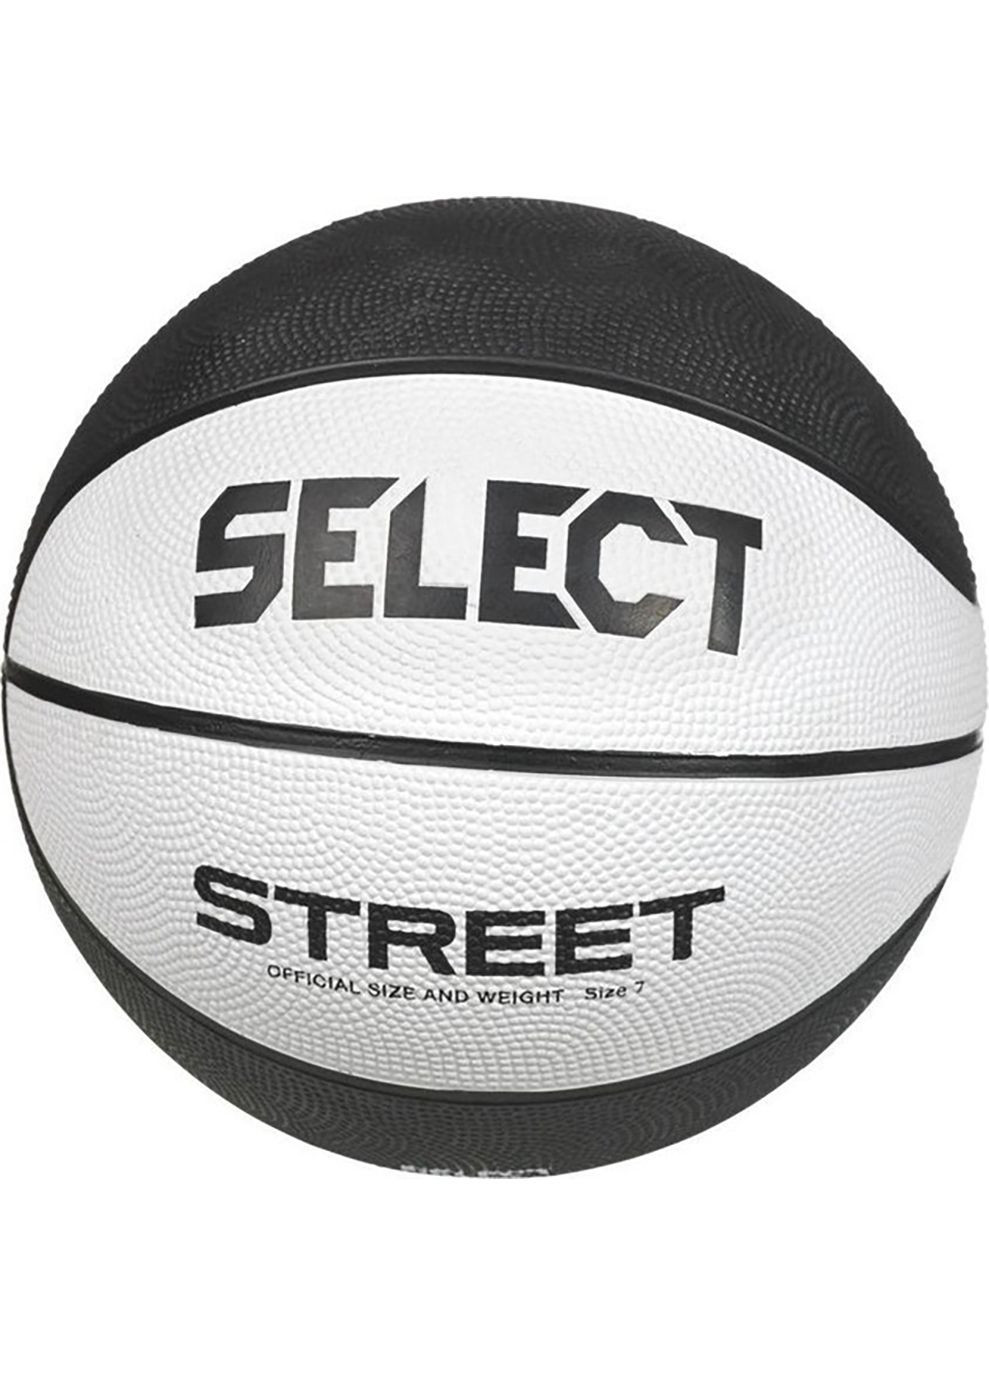 Баскетбольный Мяч BASKETBALL STREET v23 бело-черный Уни 7 Select (282316120)